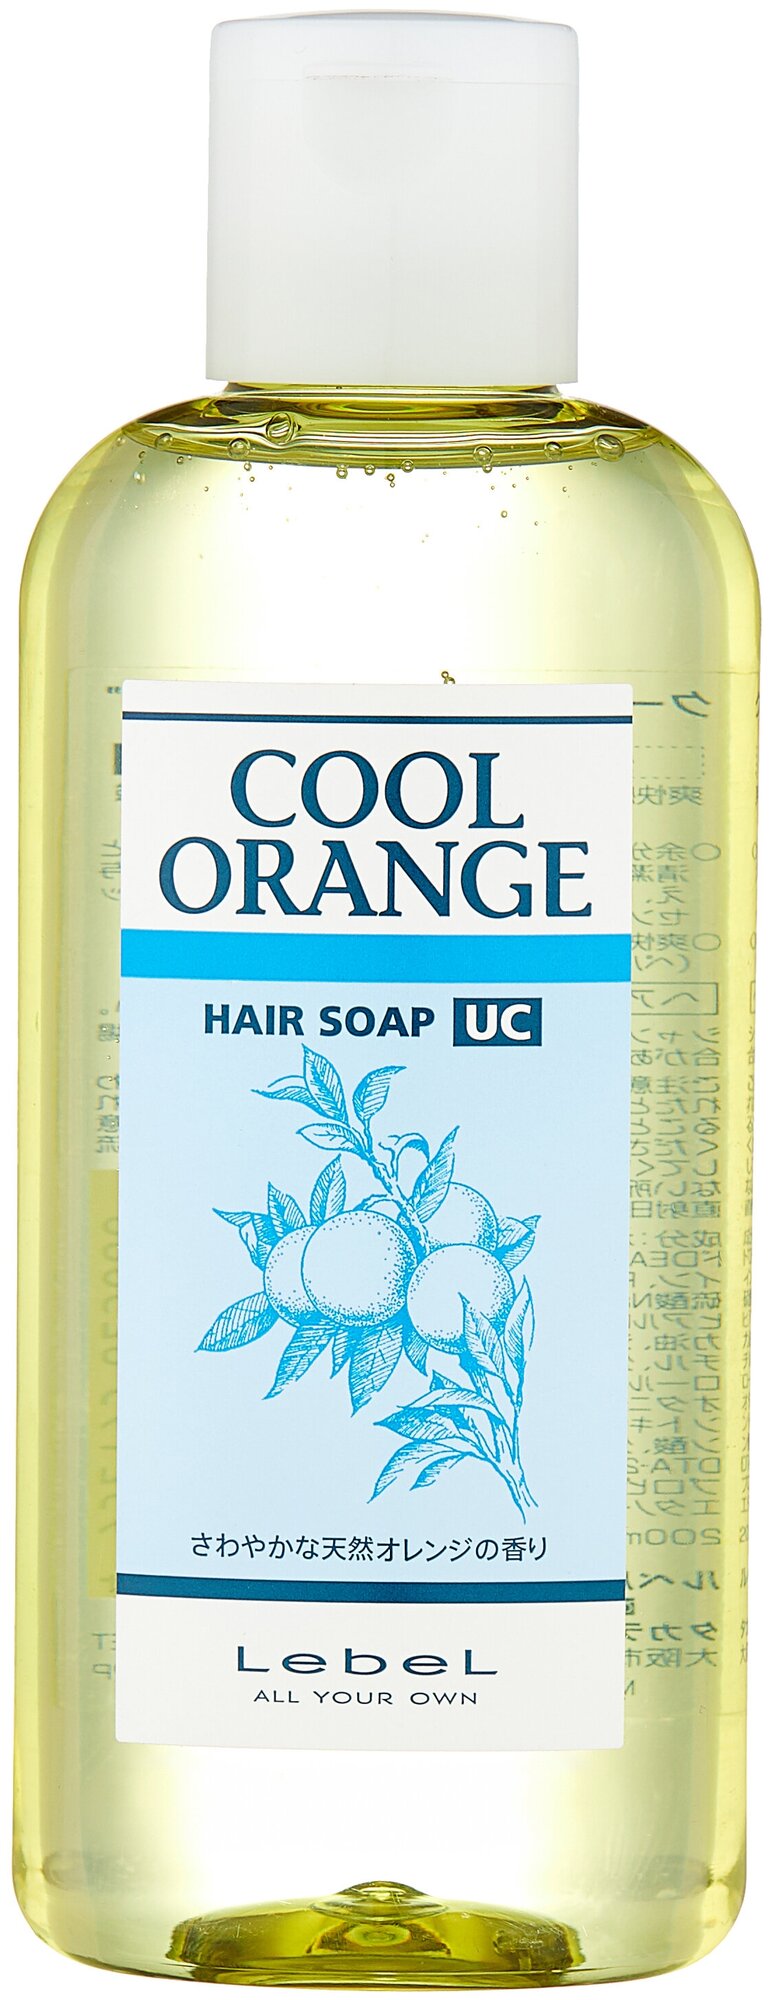 LebeL Шампунь для волос COOL ORANGE HAIR SOAP ULTRA COOL 200 мл 3686лп